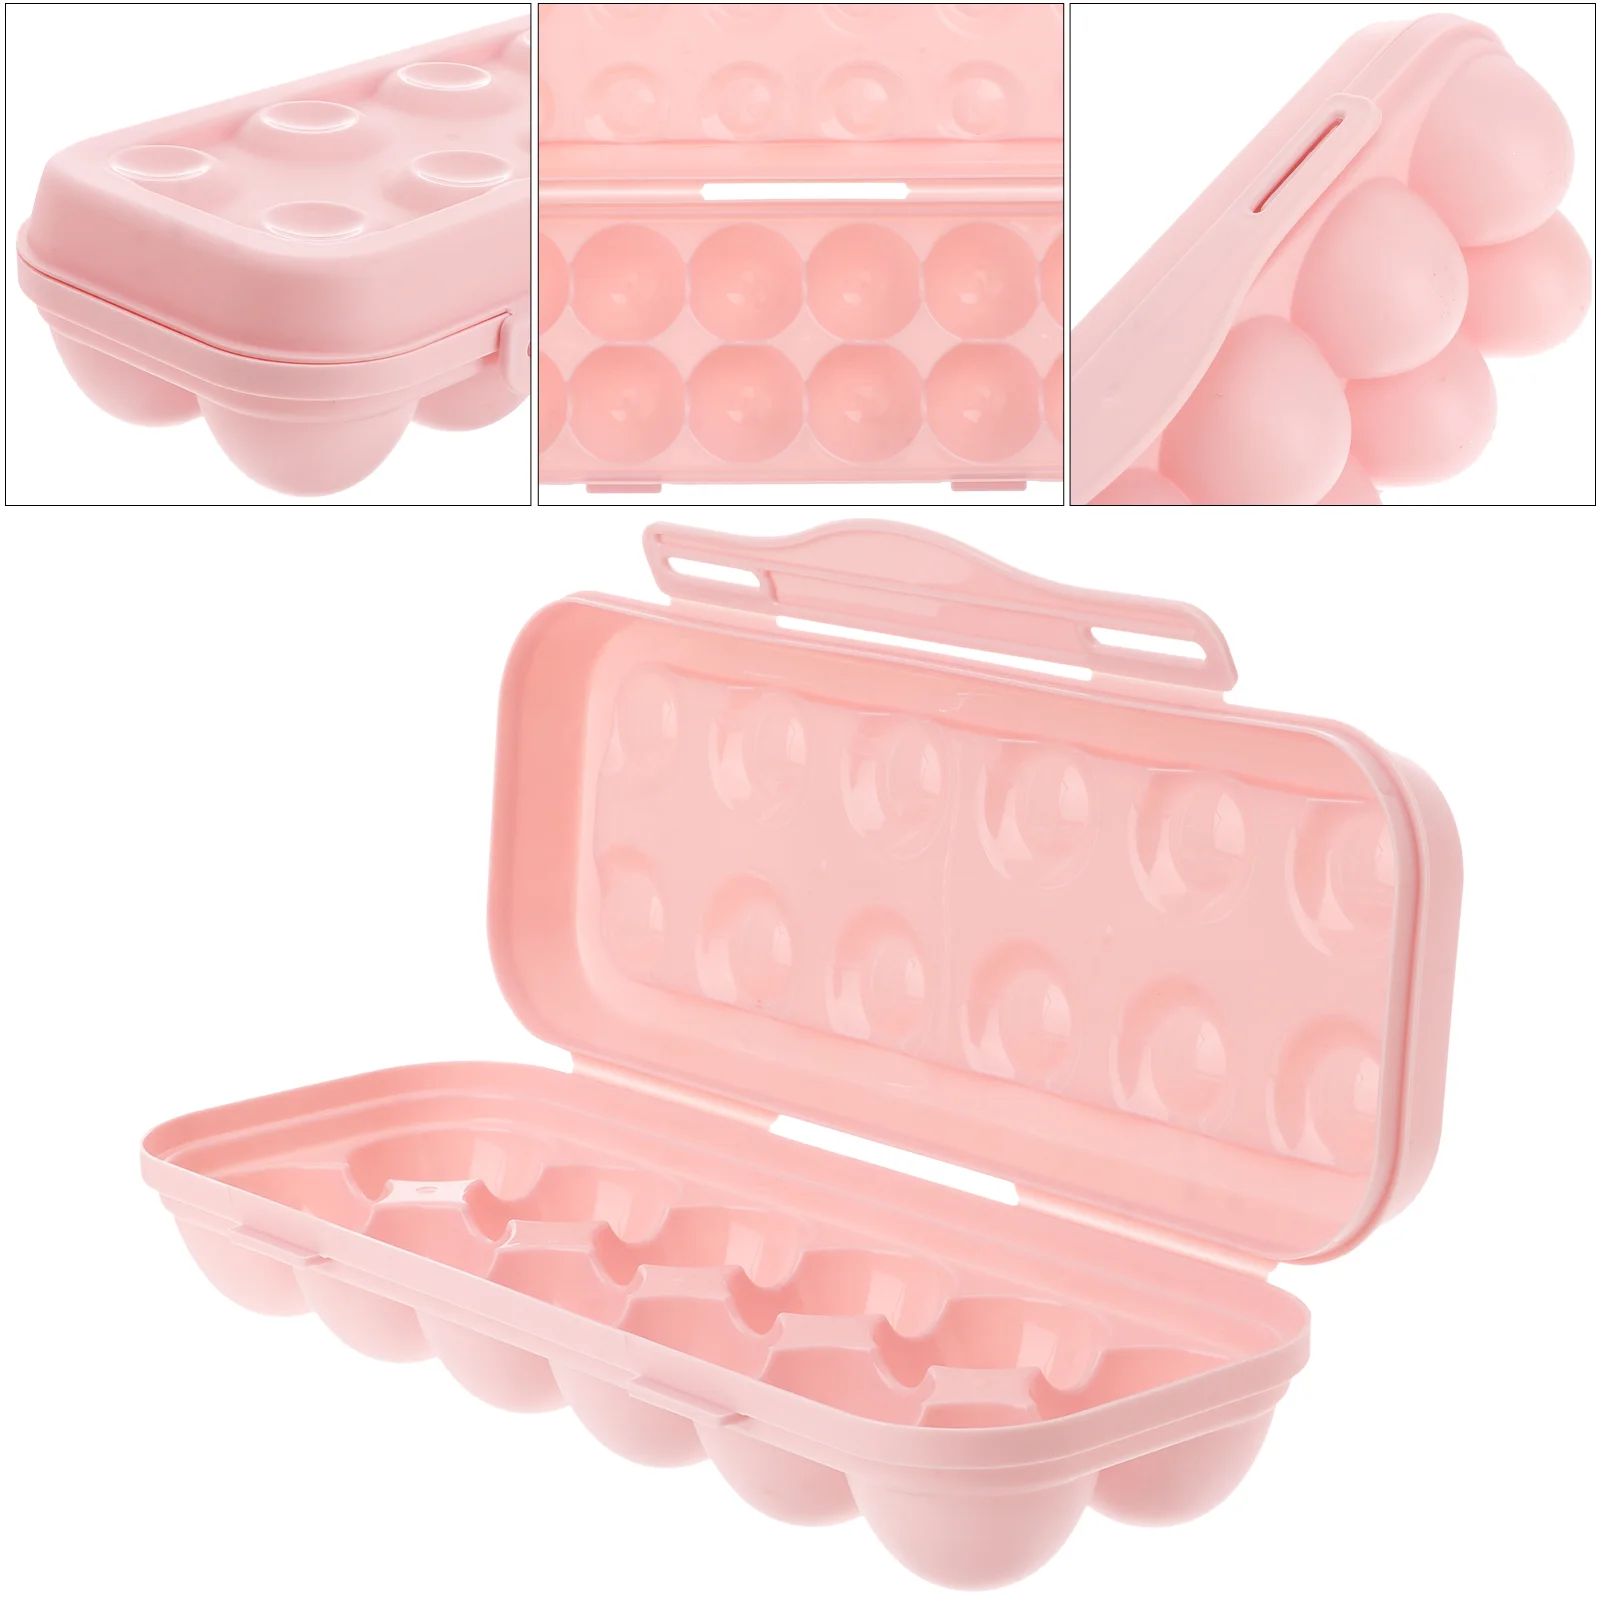 

Egg Holder Refrigerator Storage Tray Container Box Organizer Plastic Fridge Bins Eggs Carrier Rack Stackable Grids Case Deviled